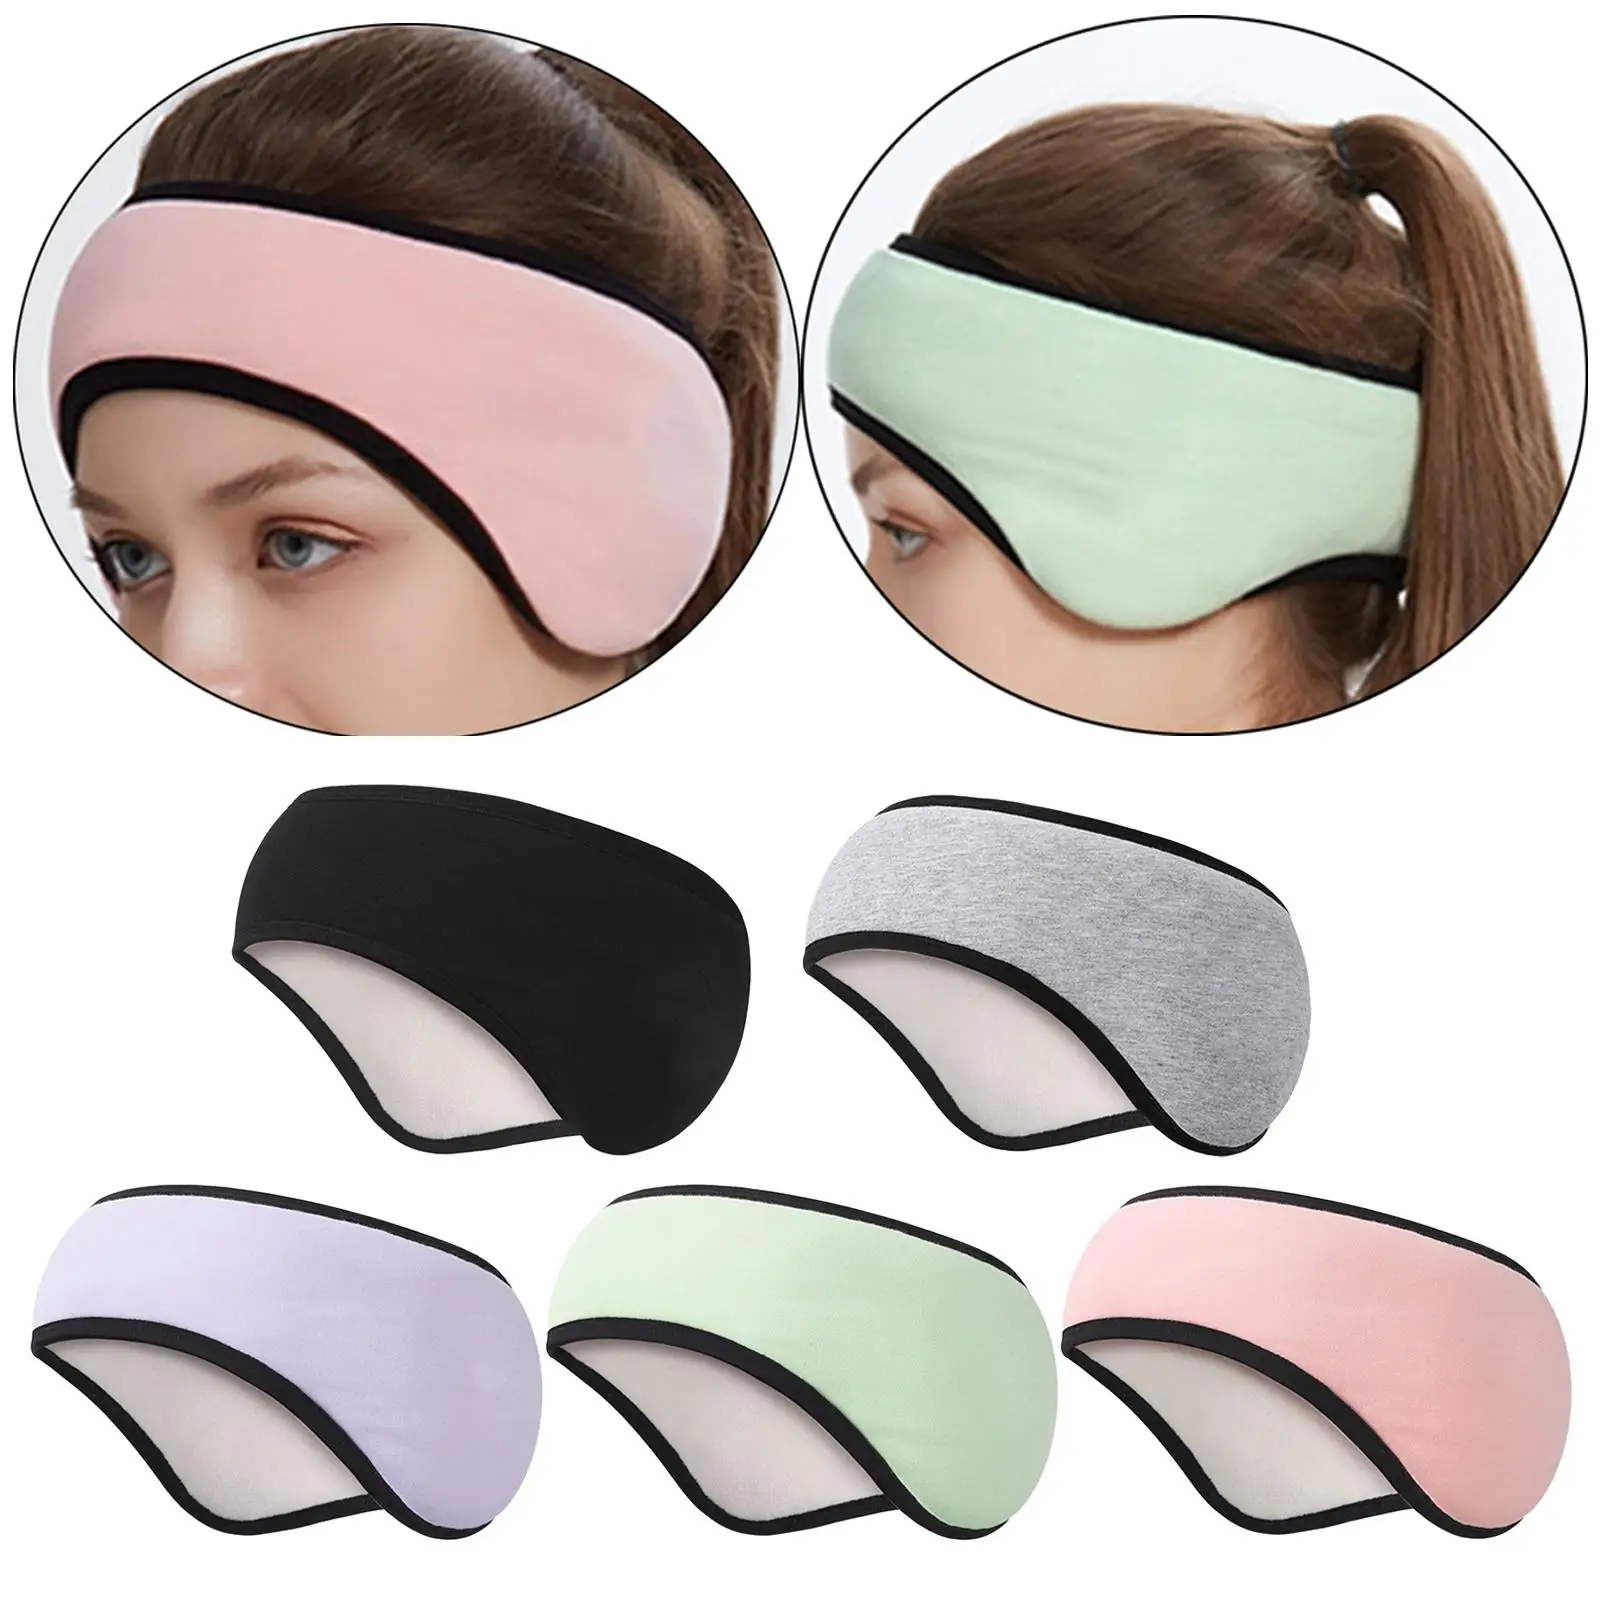 Ear Warmers Headband Comfortable Winter Earmuffs Ear Protector for Women Riding Skiing Camping Hiking Travelling